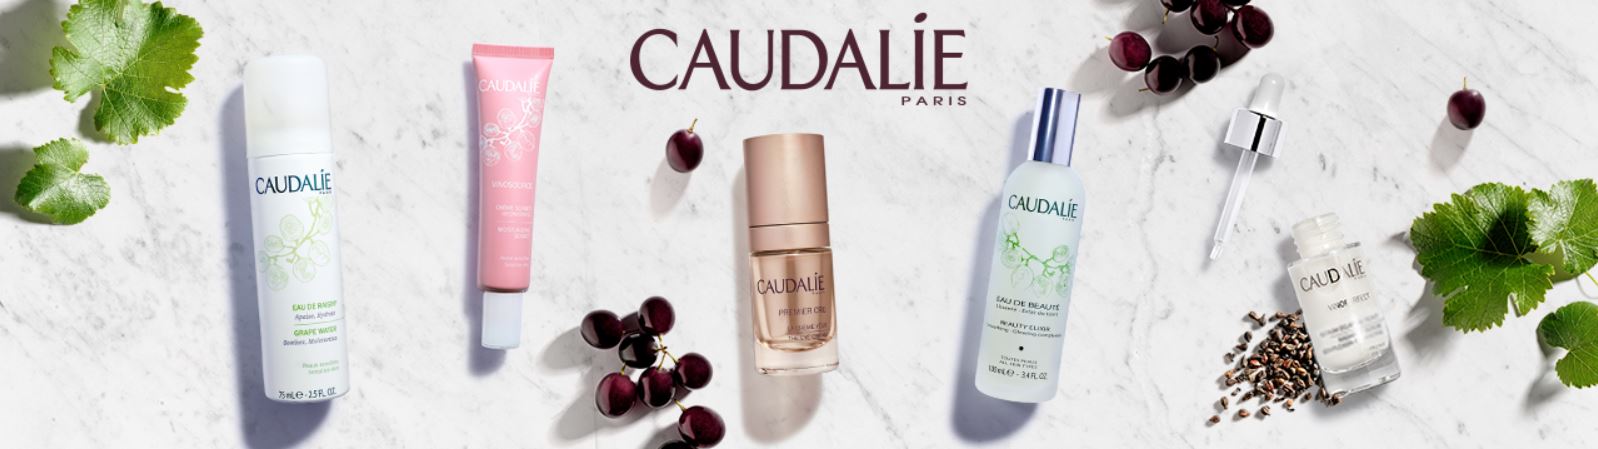 CAUDALIE Products